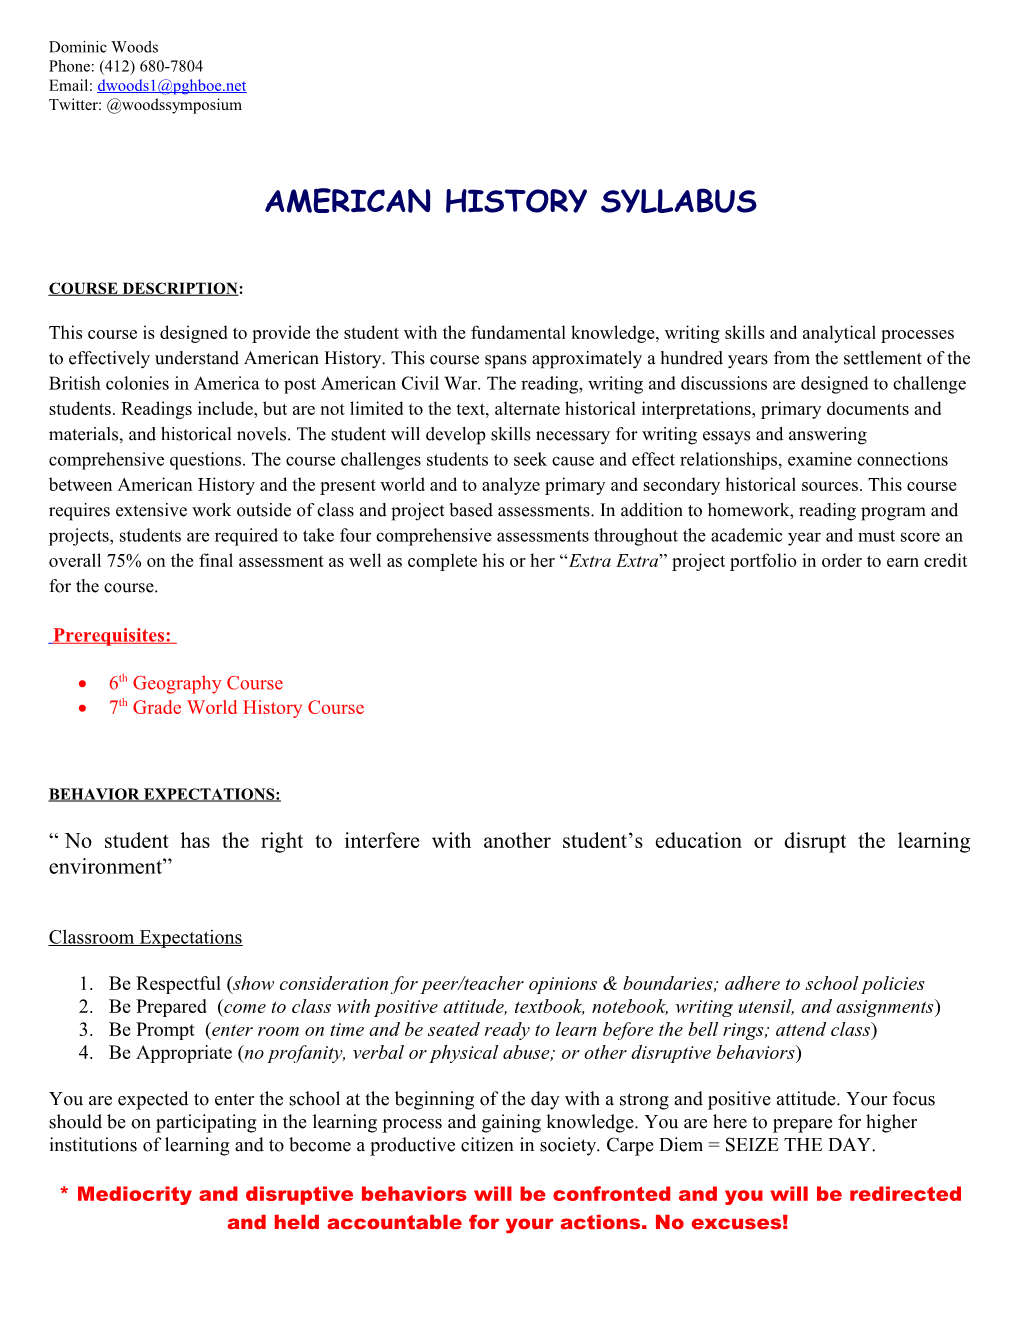 American History Syllabus